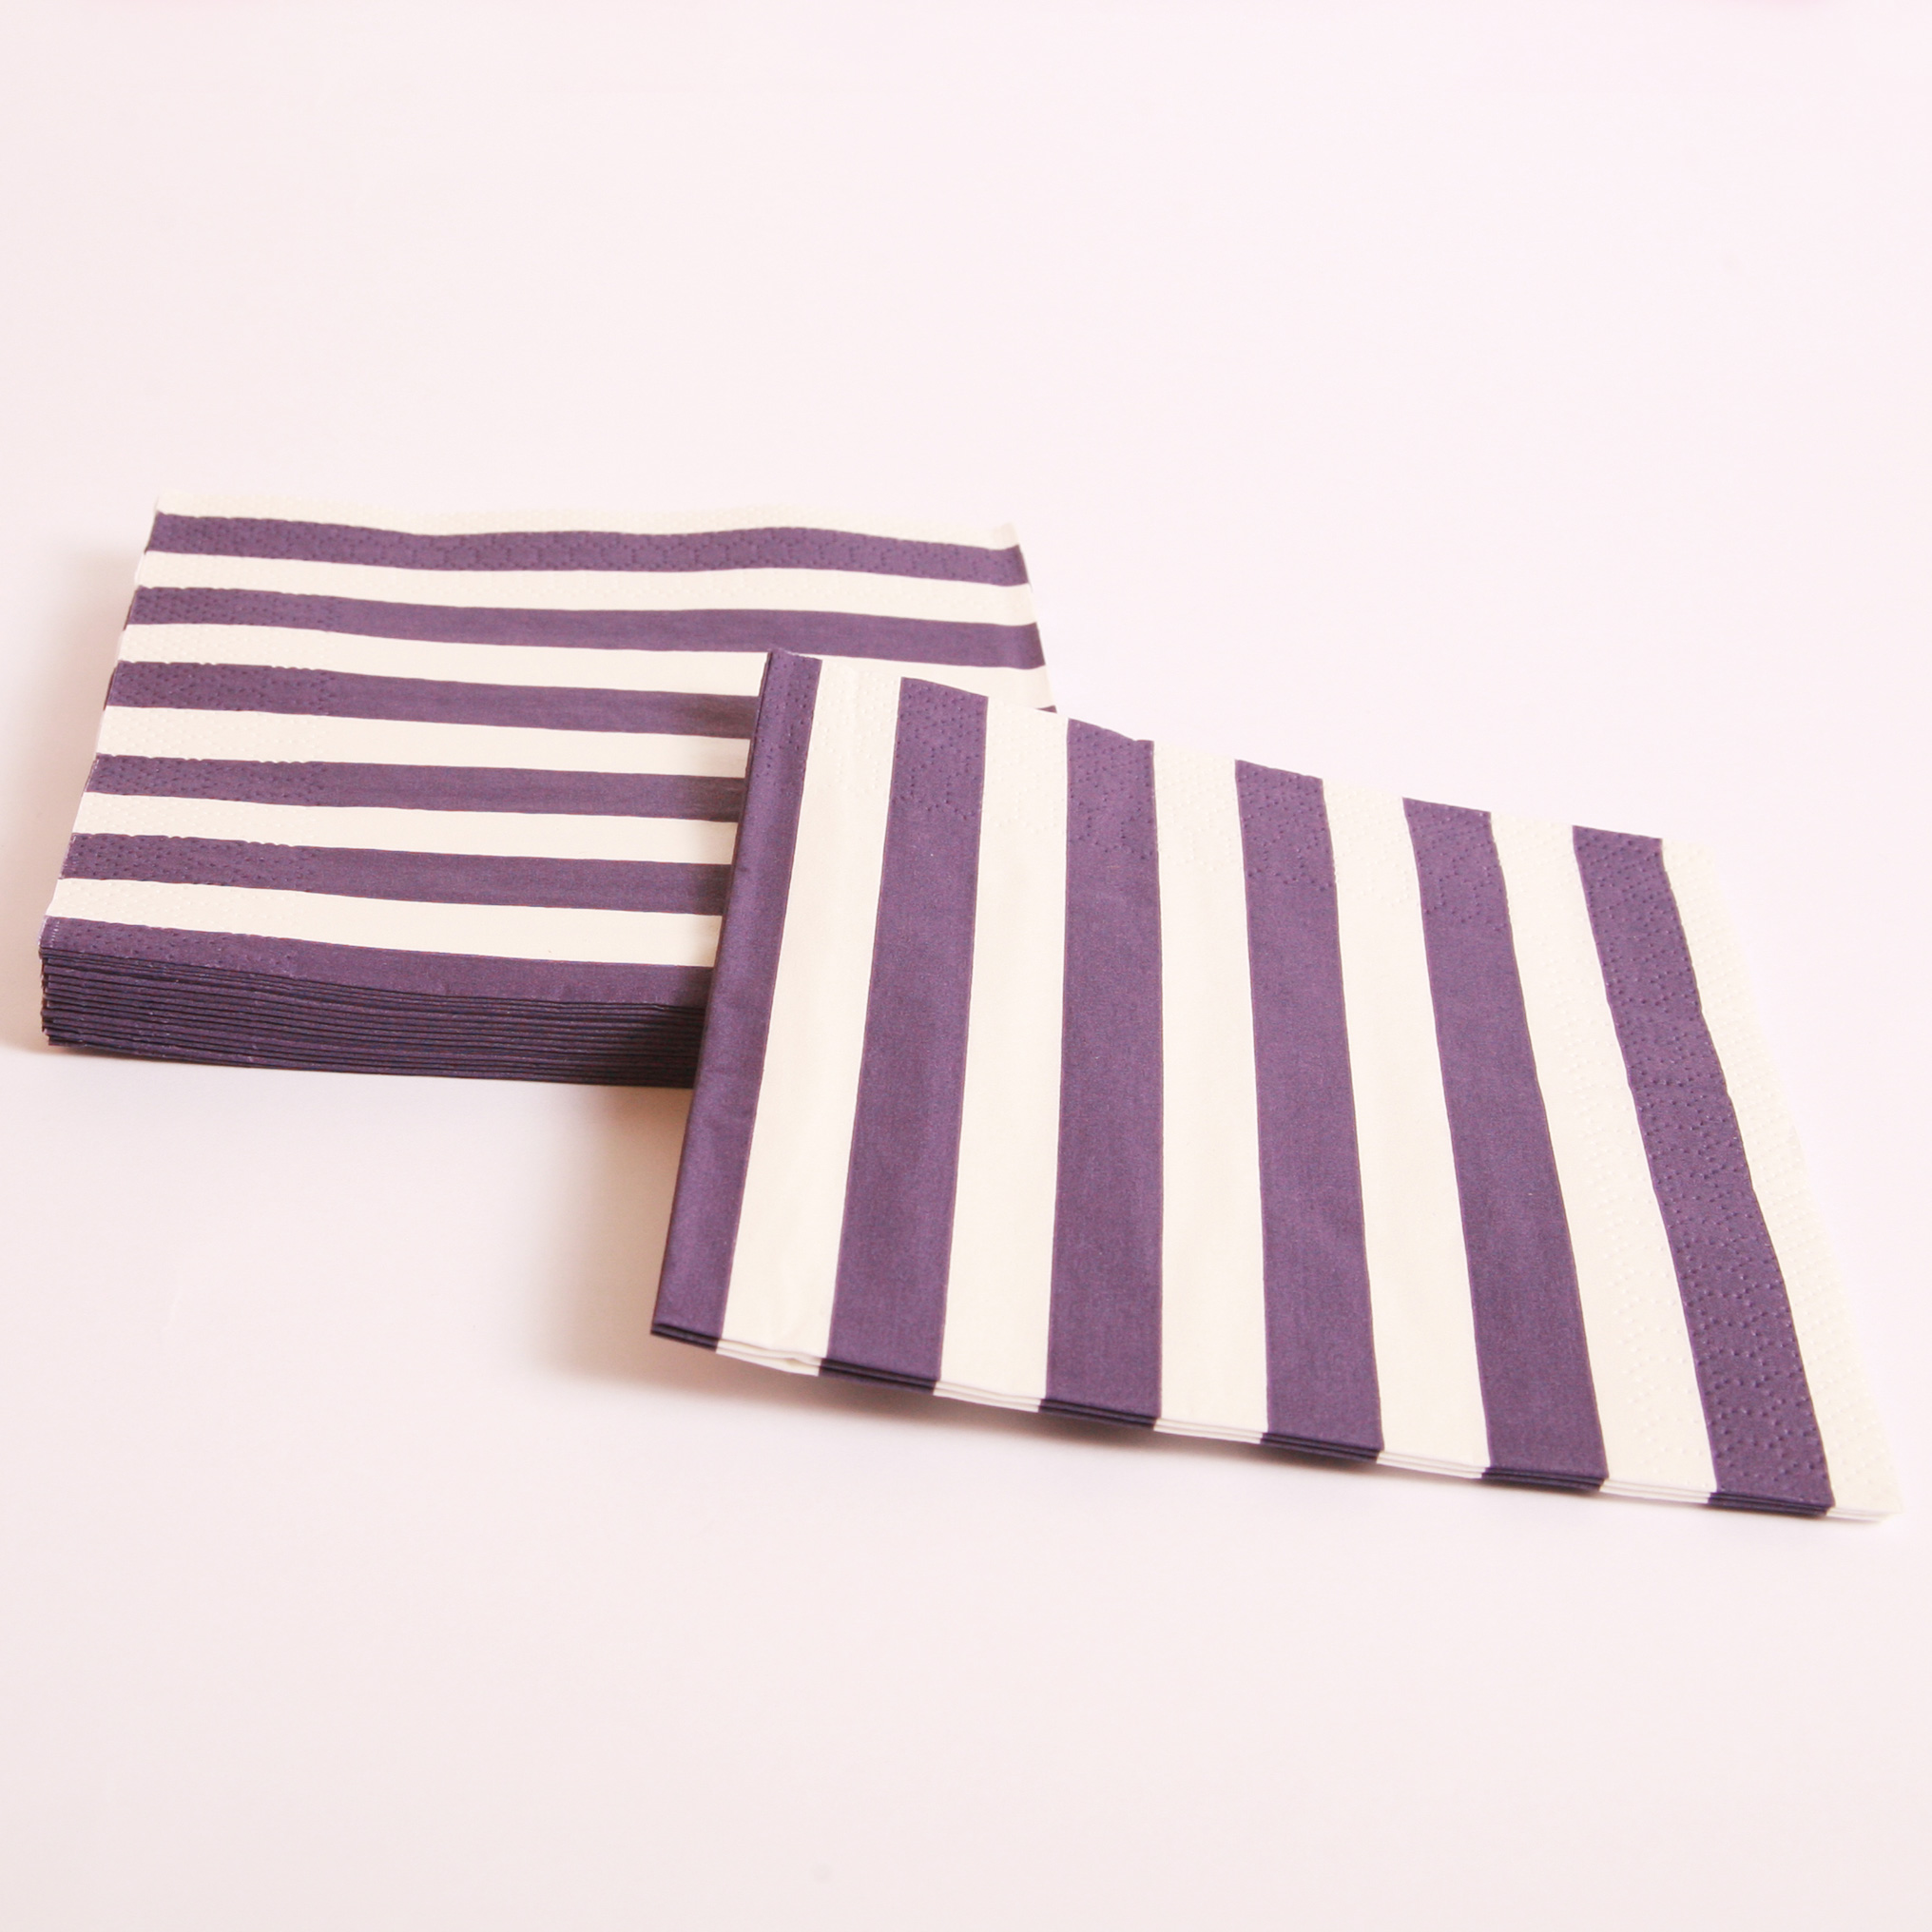 16 purple and white striped napkins